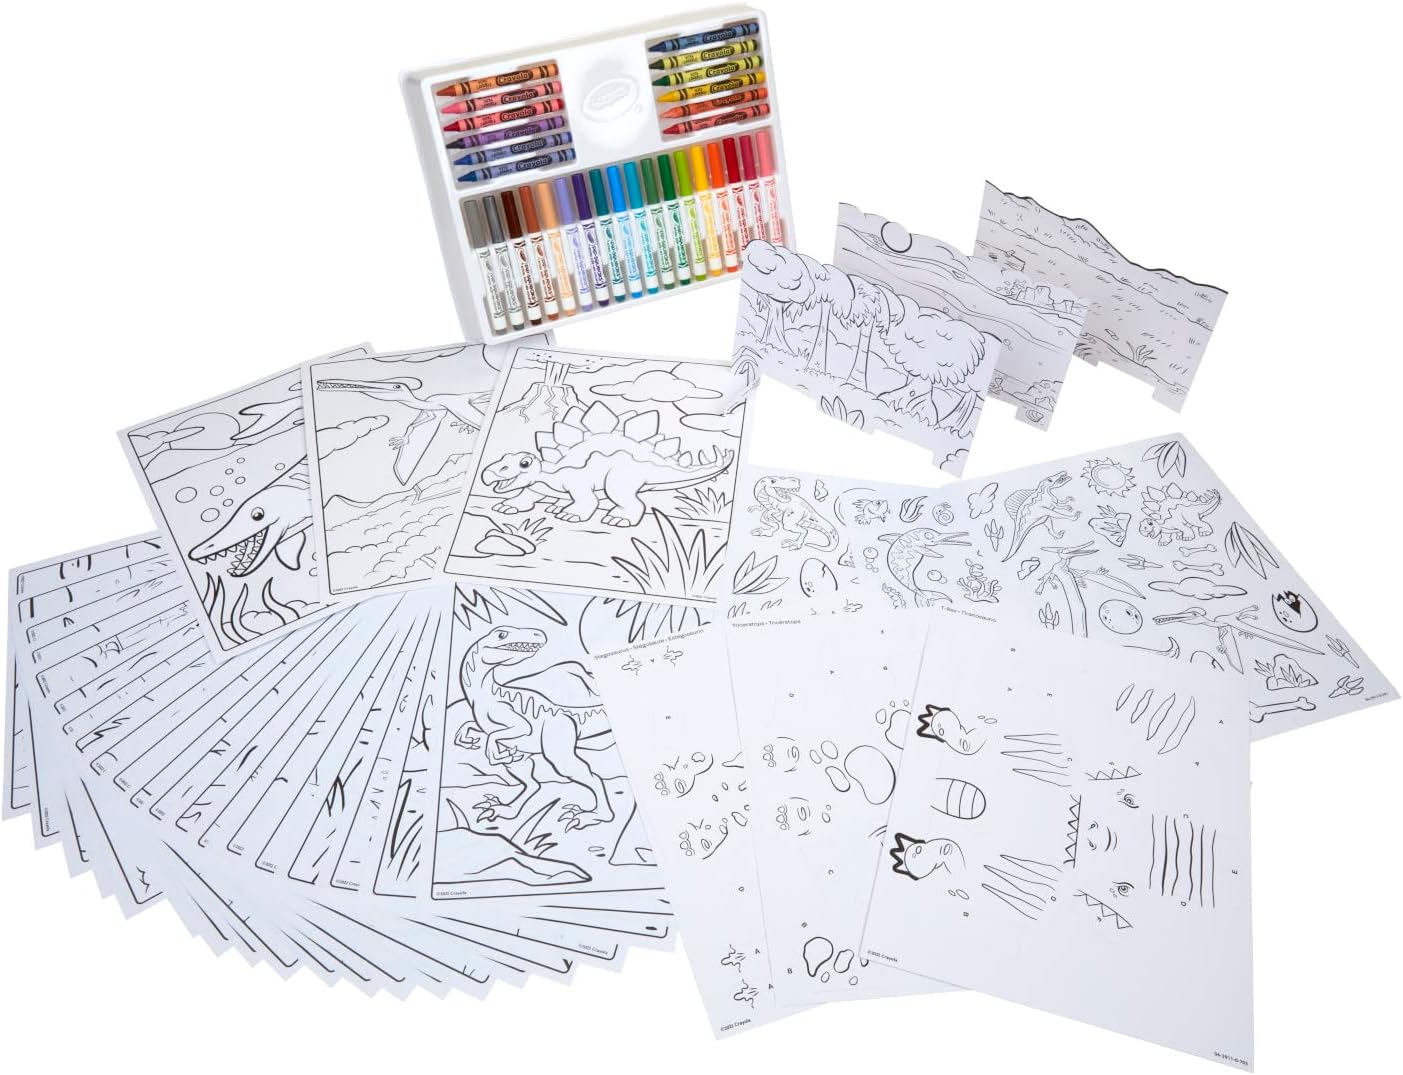 Crayola Dinosaurs 5-in-1 Creativity Kit